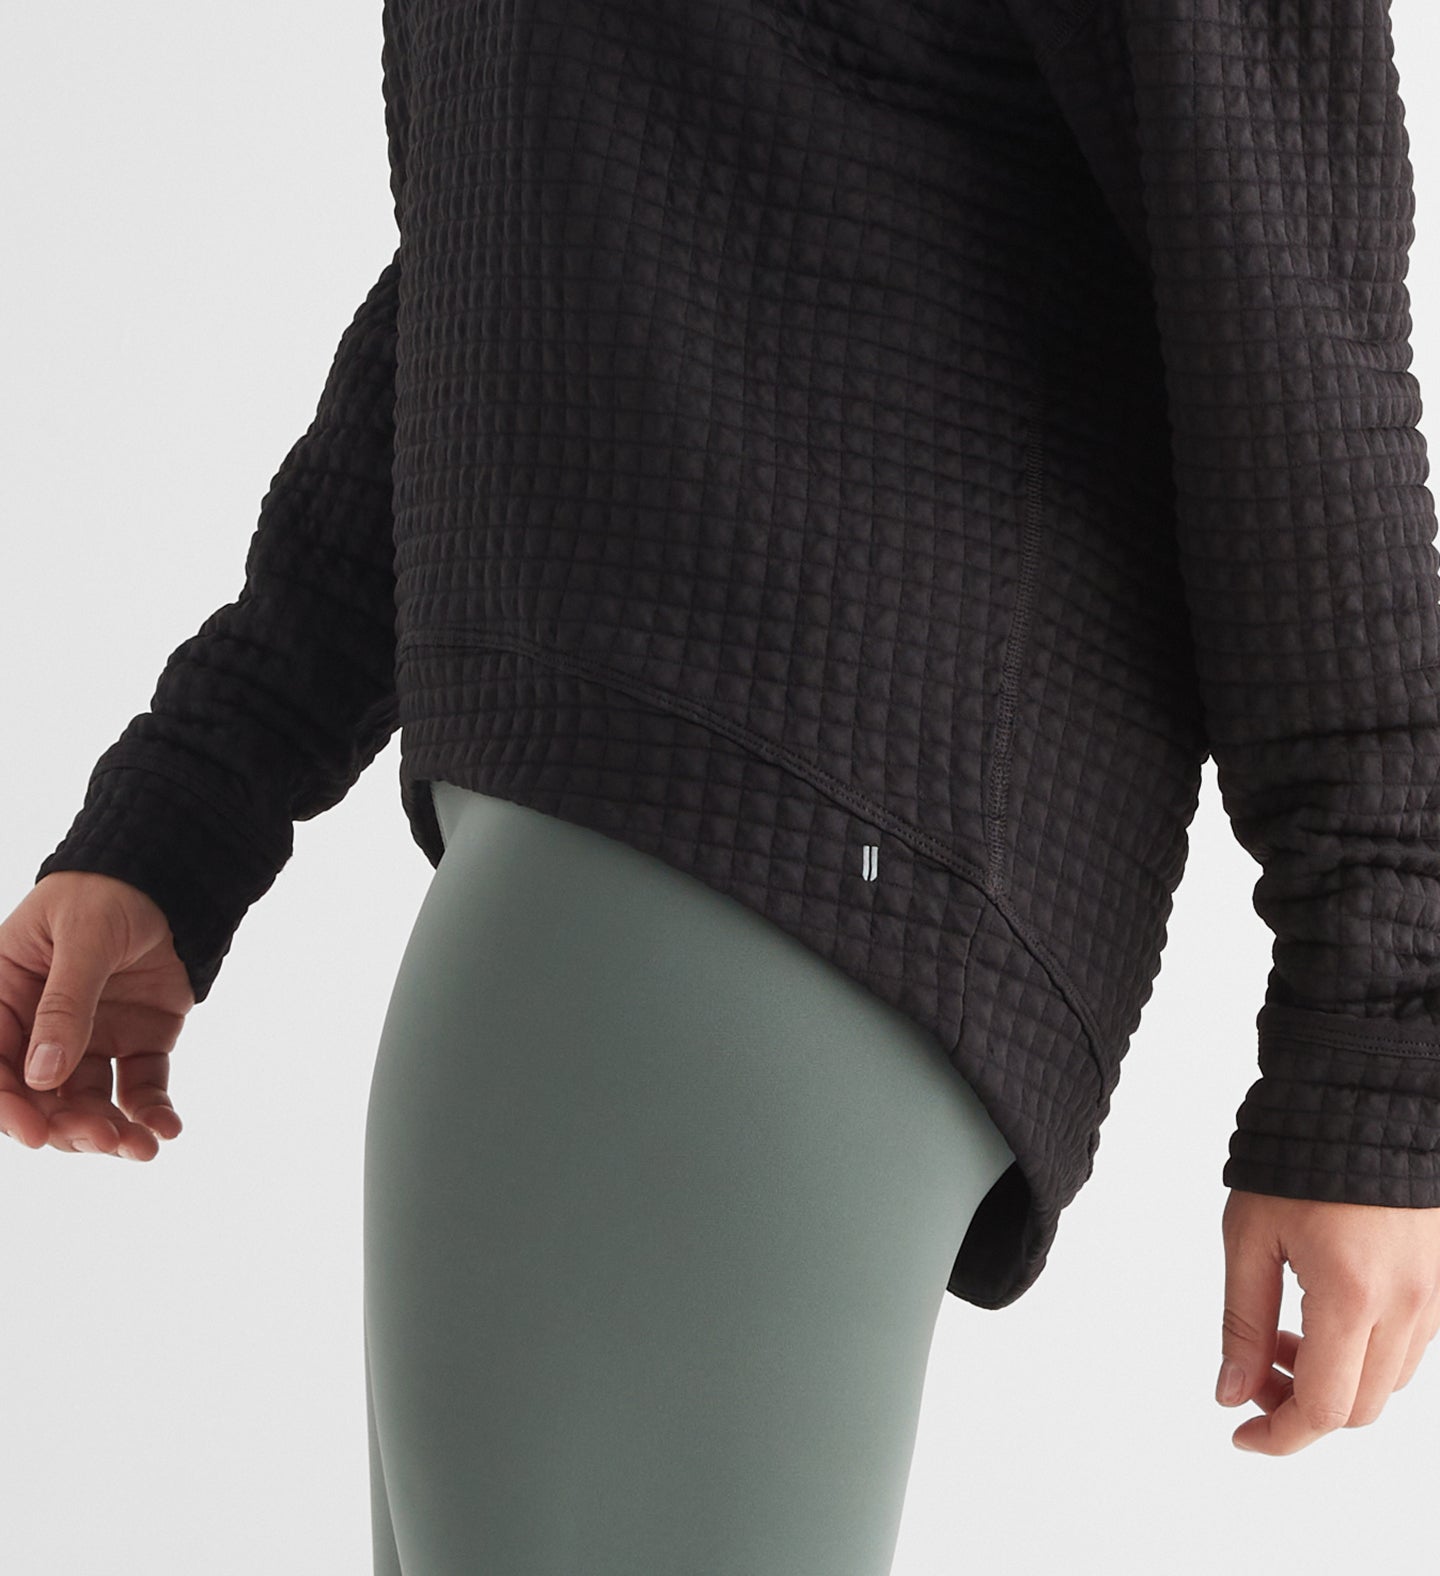 LULULEMON $98.00 The Sweater The Better Dark Grey Knit Pullover